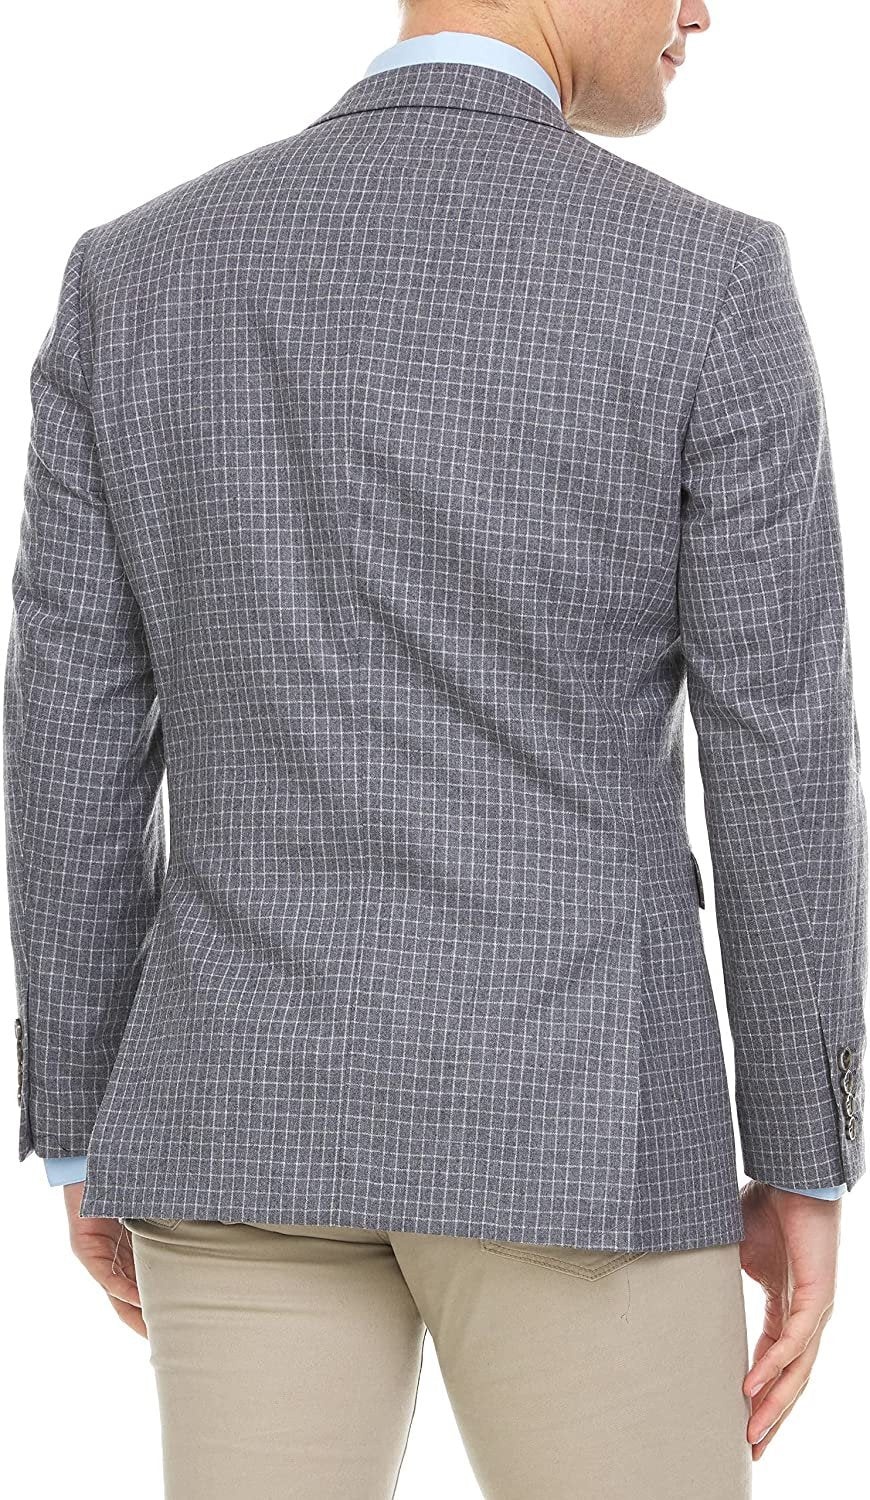 Adam Baker Men's Single Breasted 100% Wool Ultra Slim Fit Blazer/Sport Coat - Gray Check